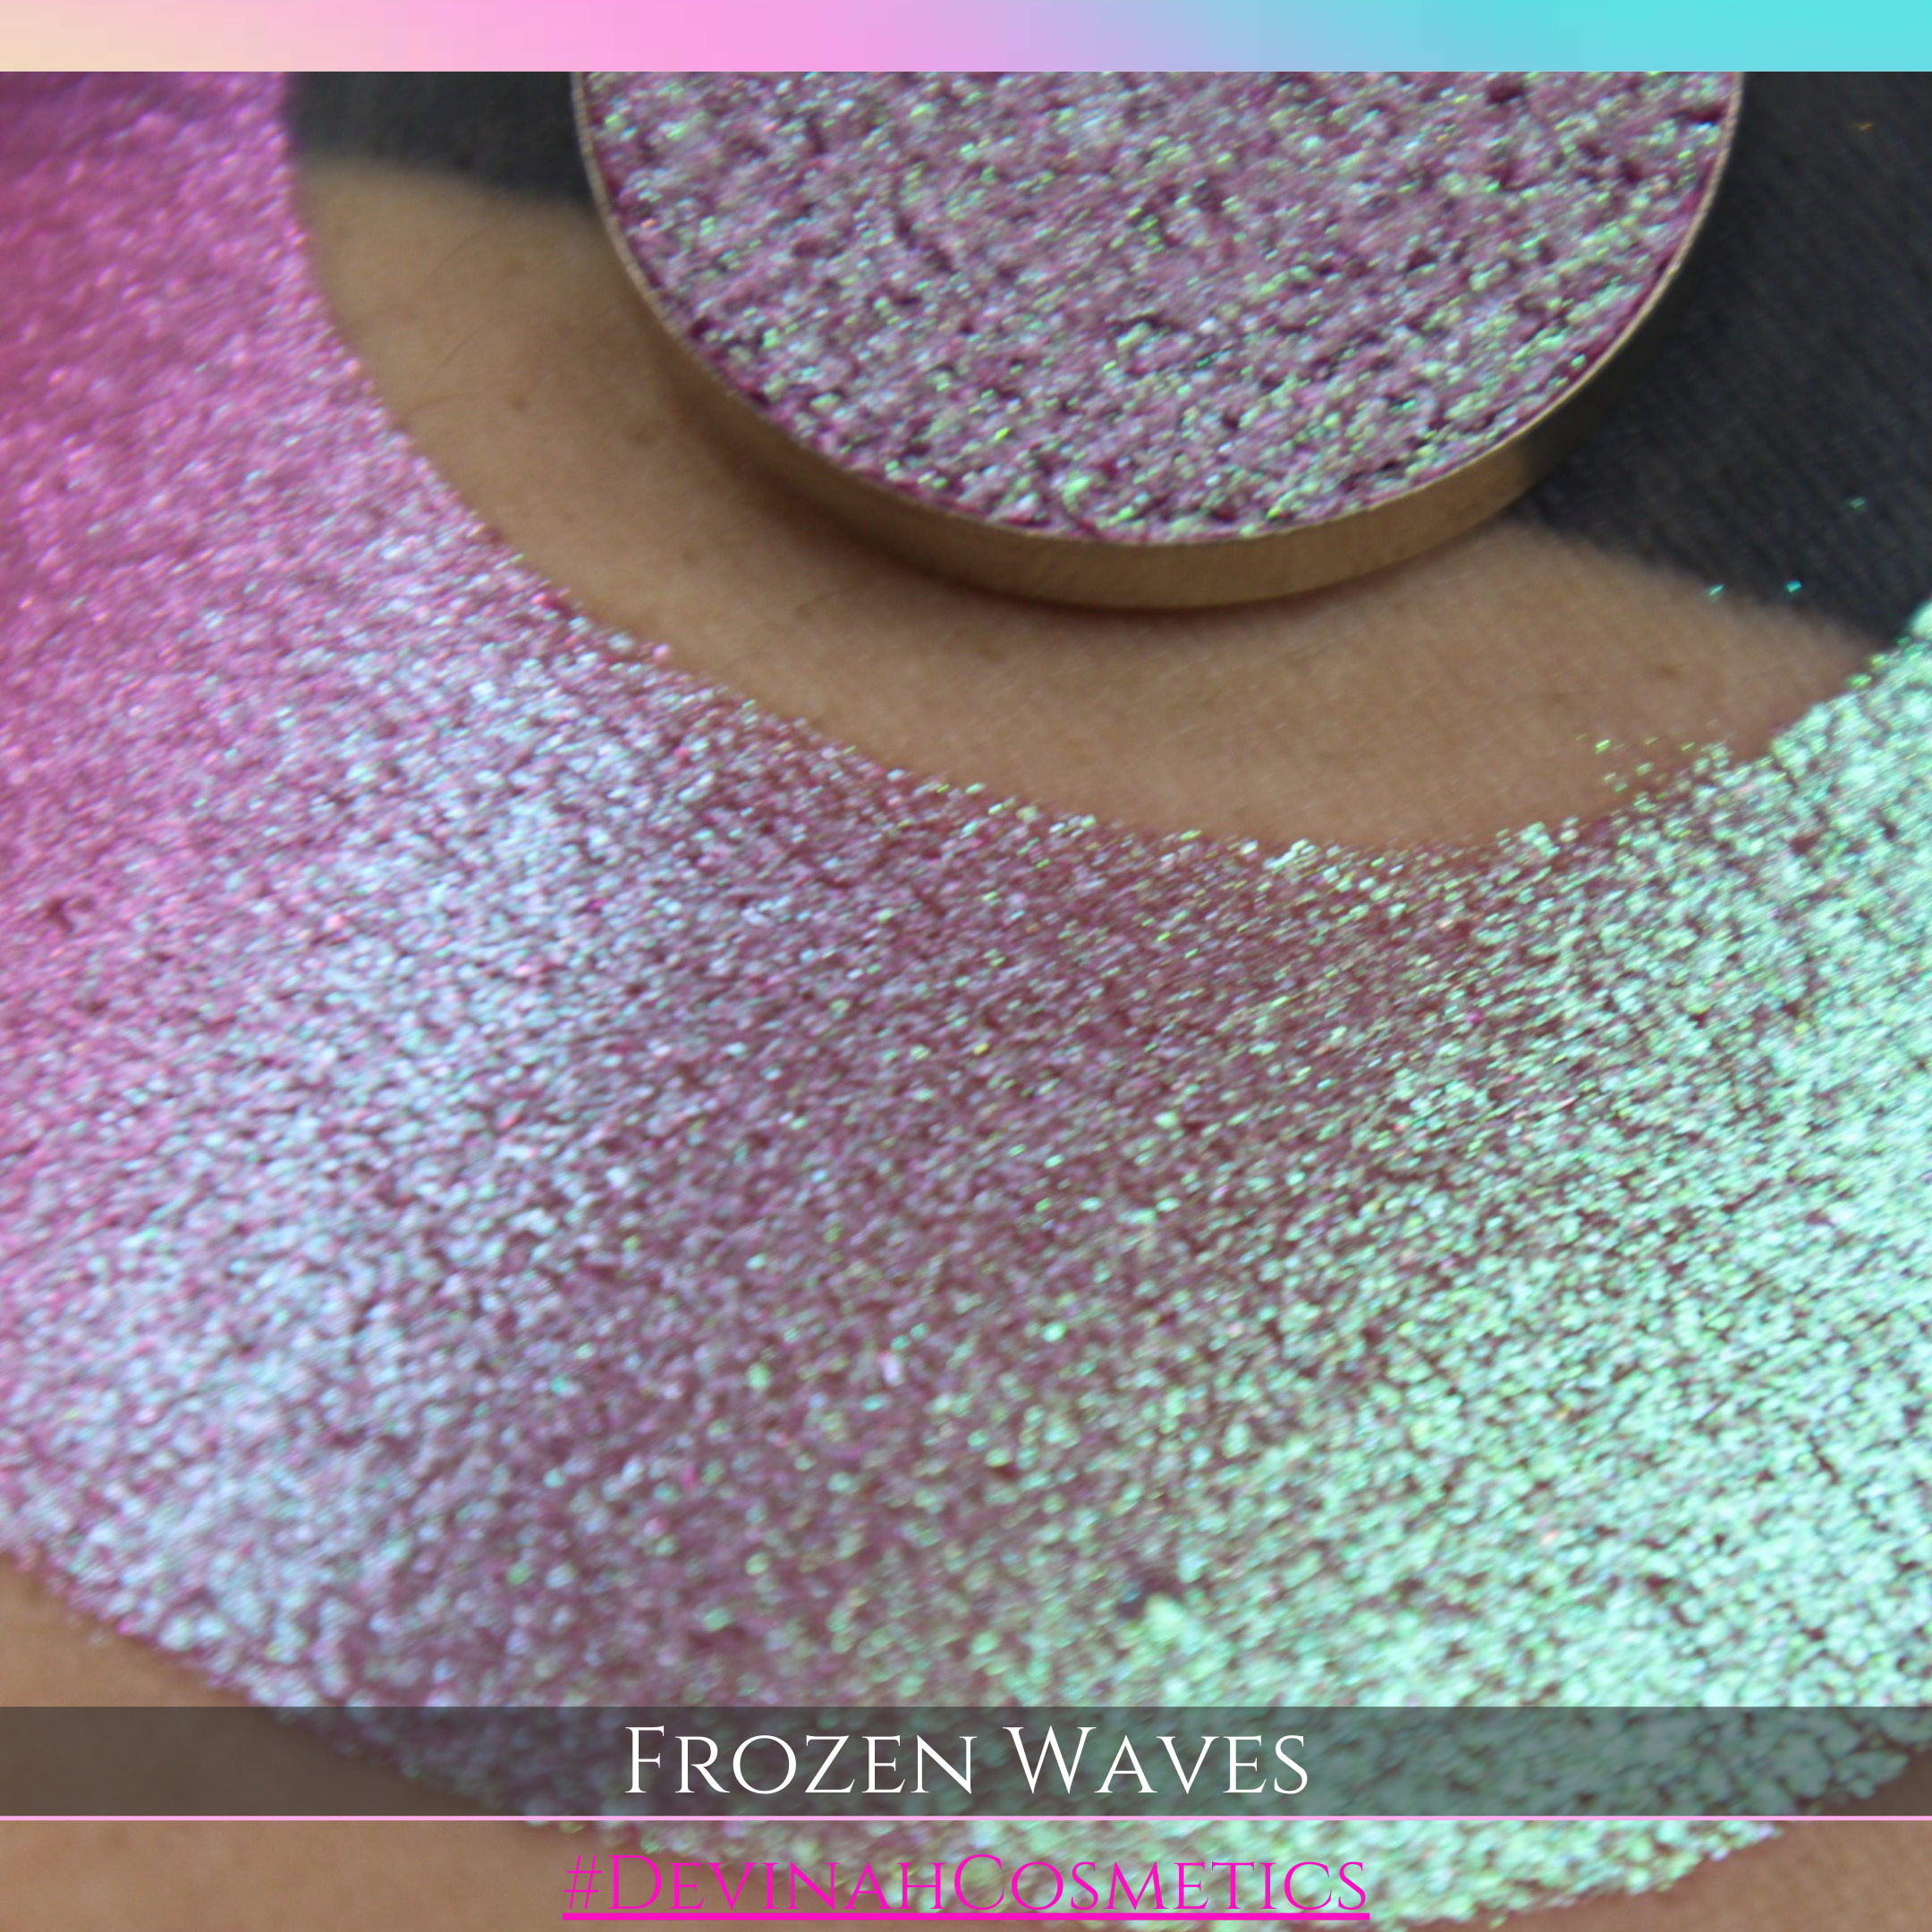 FROZEN WAVES Pressed Pigment